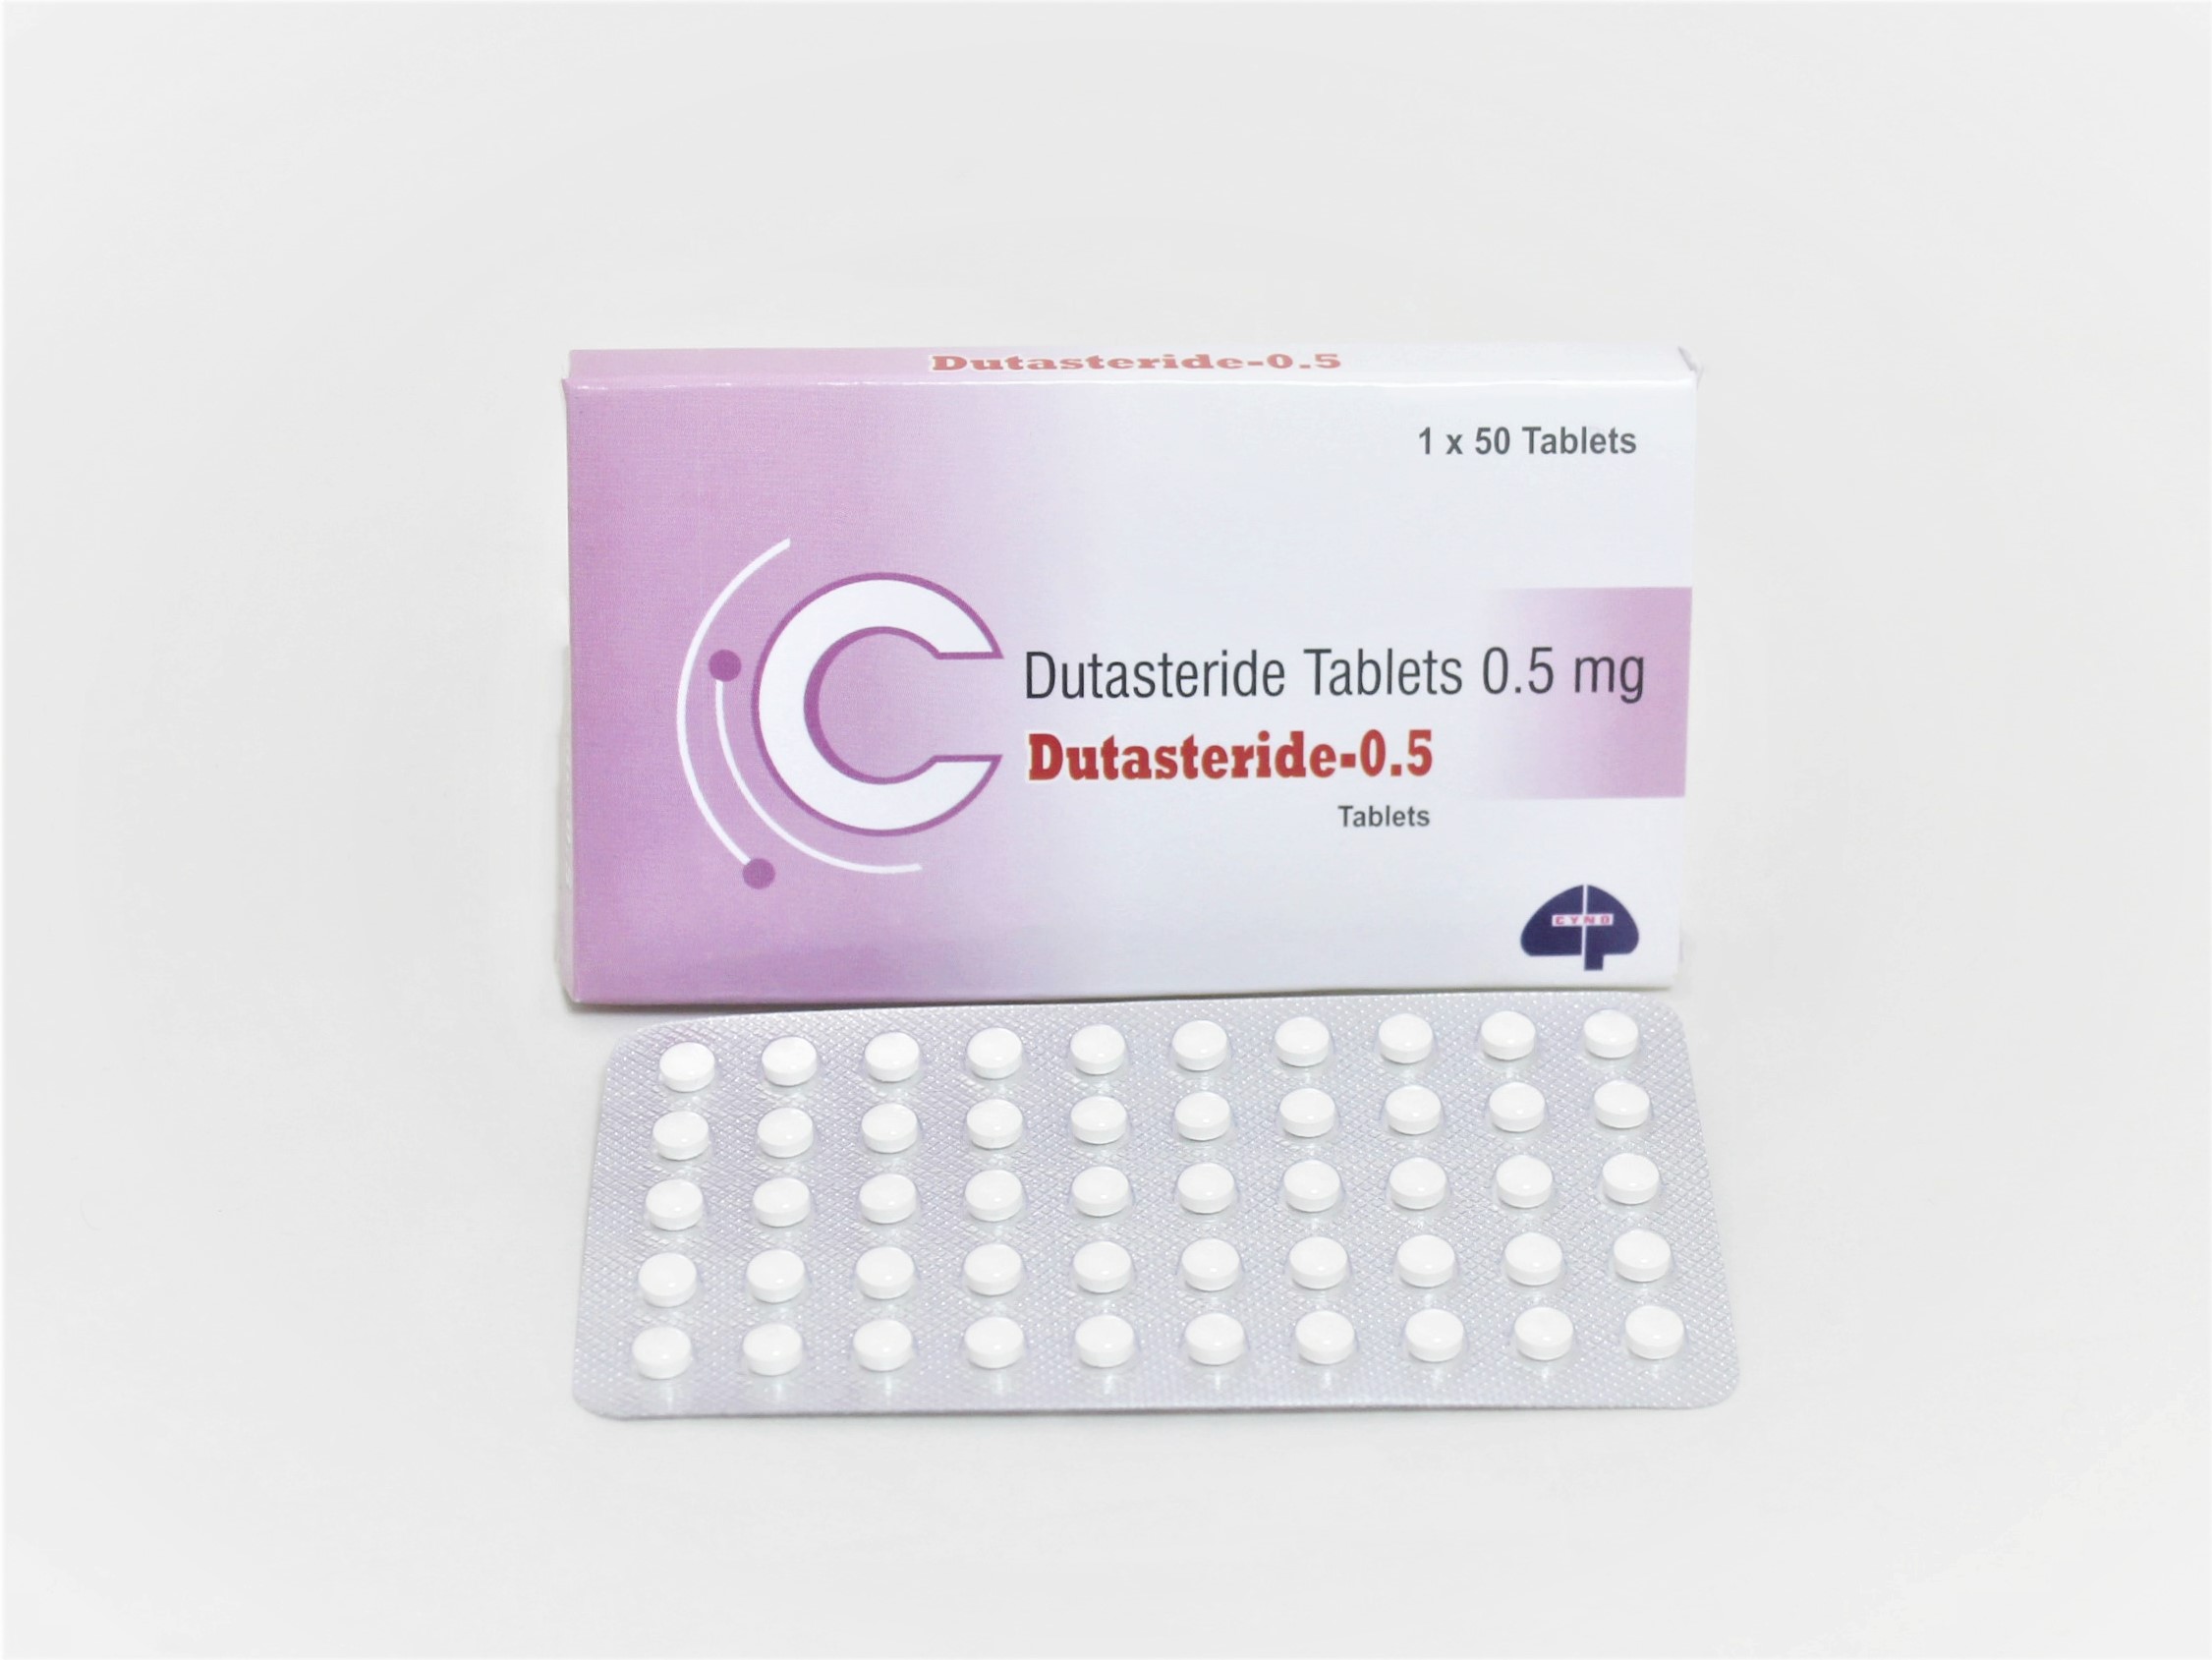 Dutasteride Tablets 0.5 mg - 50 Tablets per box